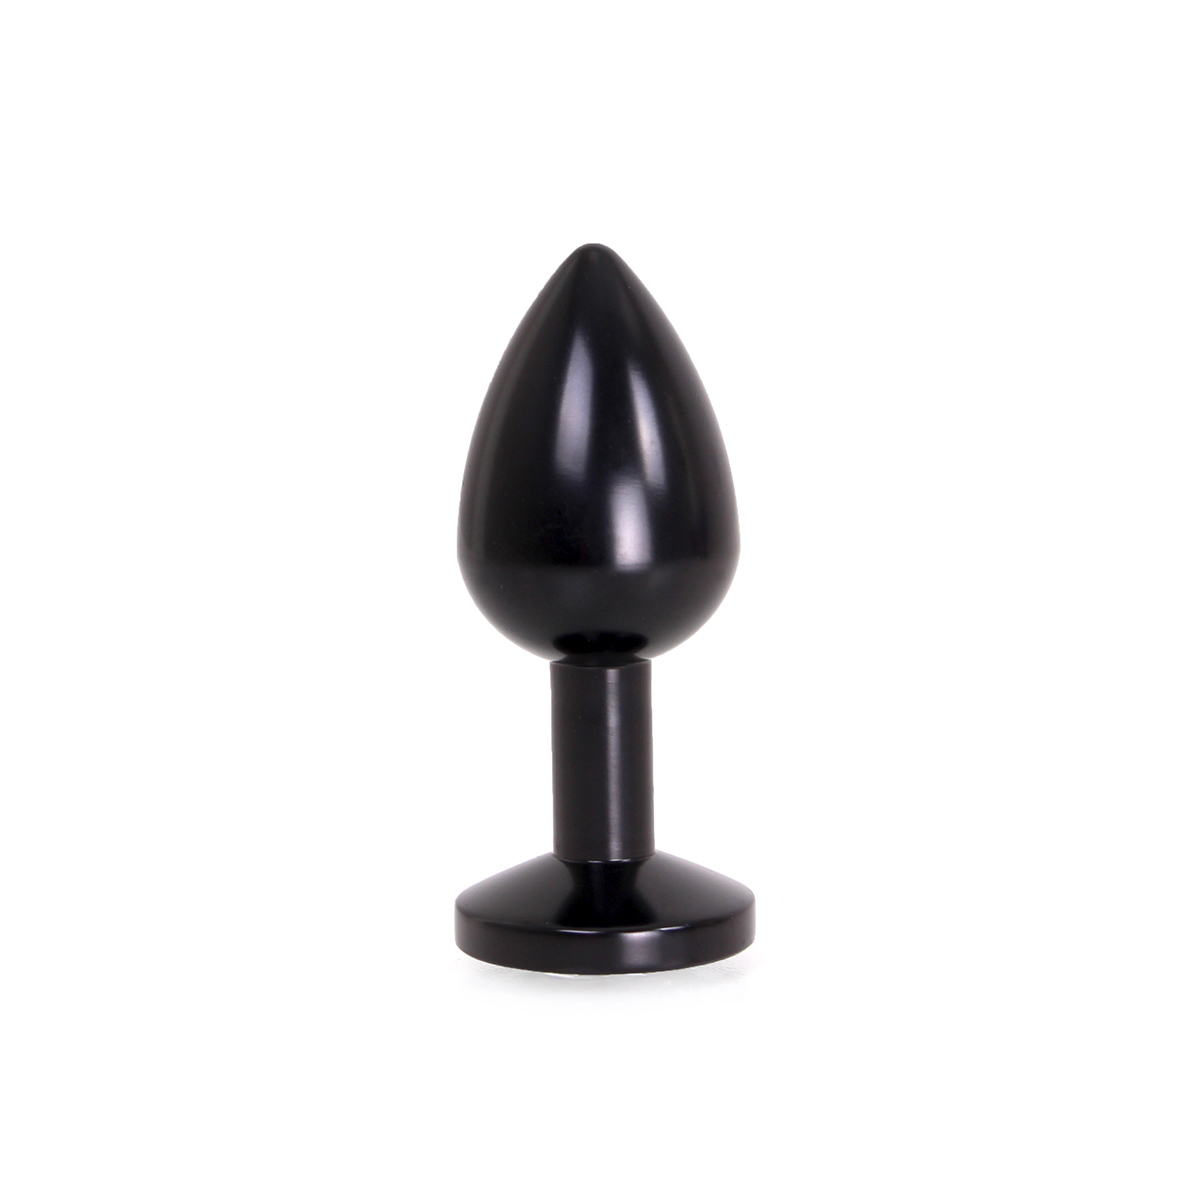 Aluminium-Buttplug-Black-with-Clear-Gem-OPR-2820037-2